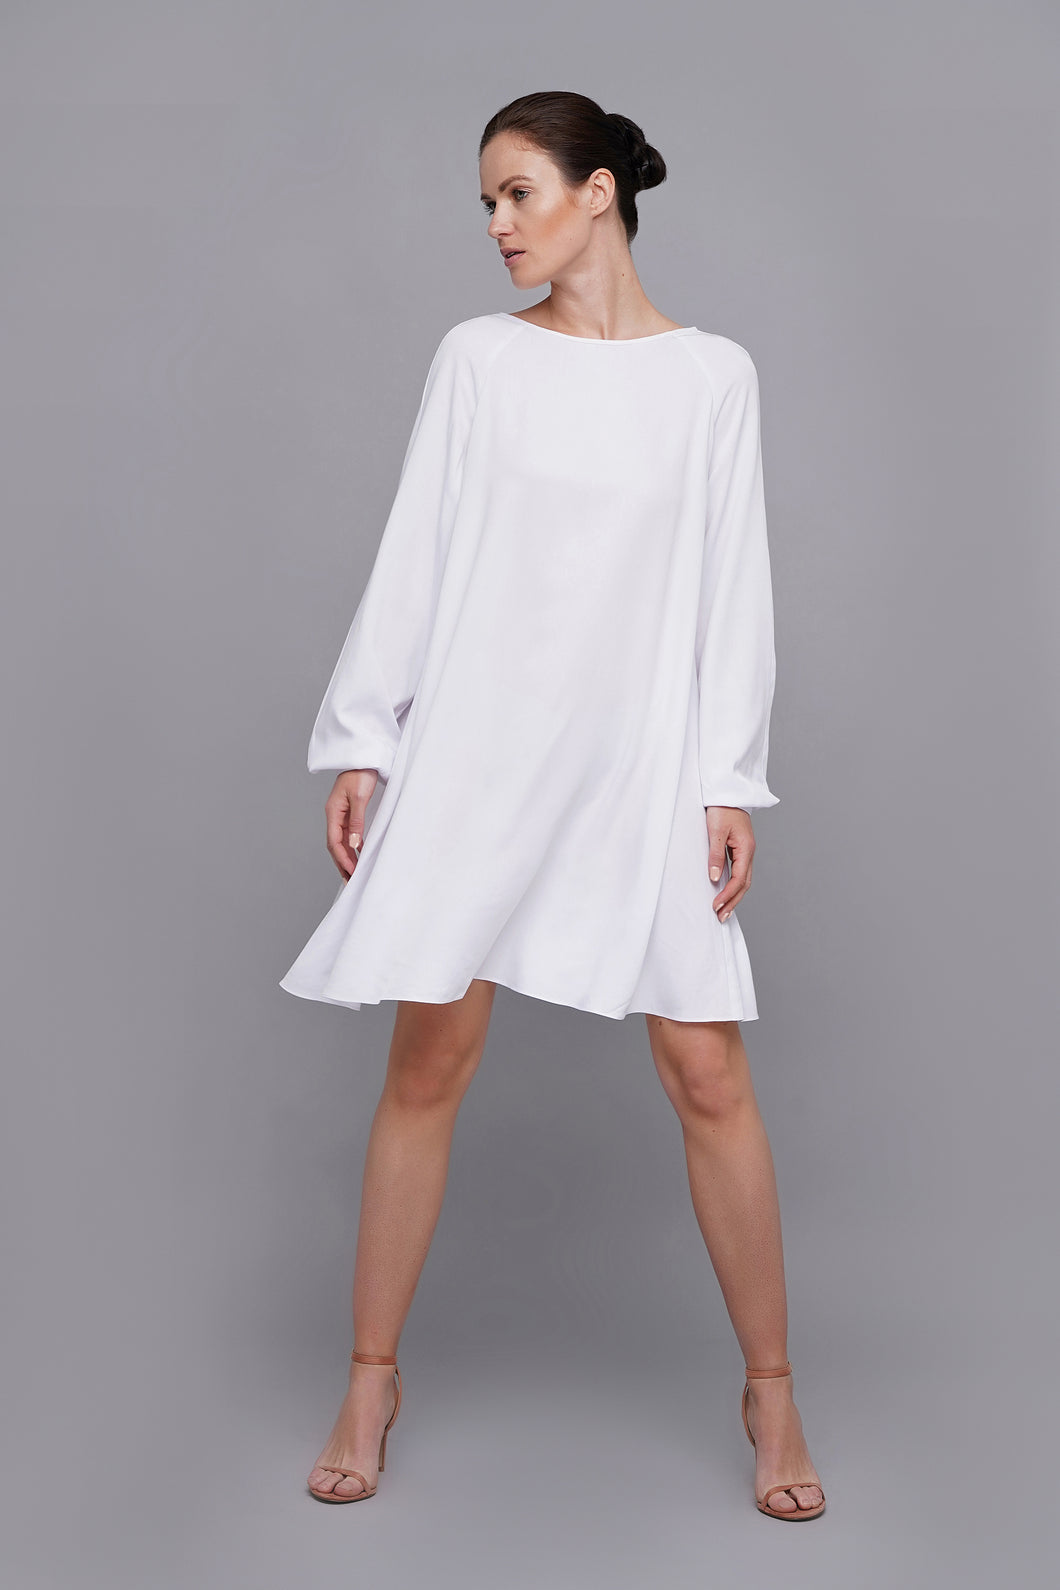 White long sleeve loose summer dress